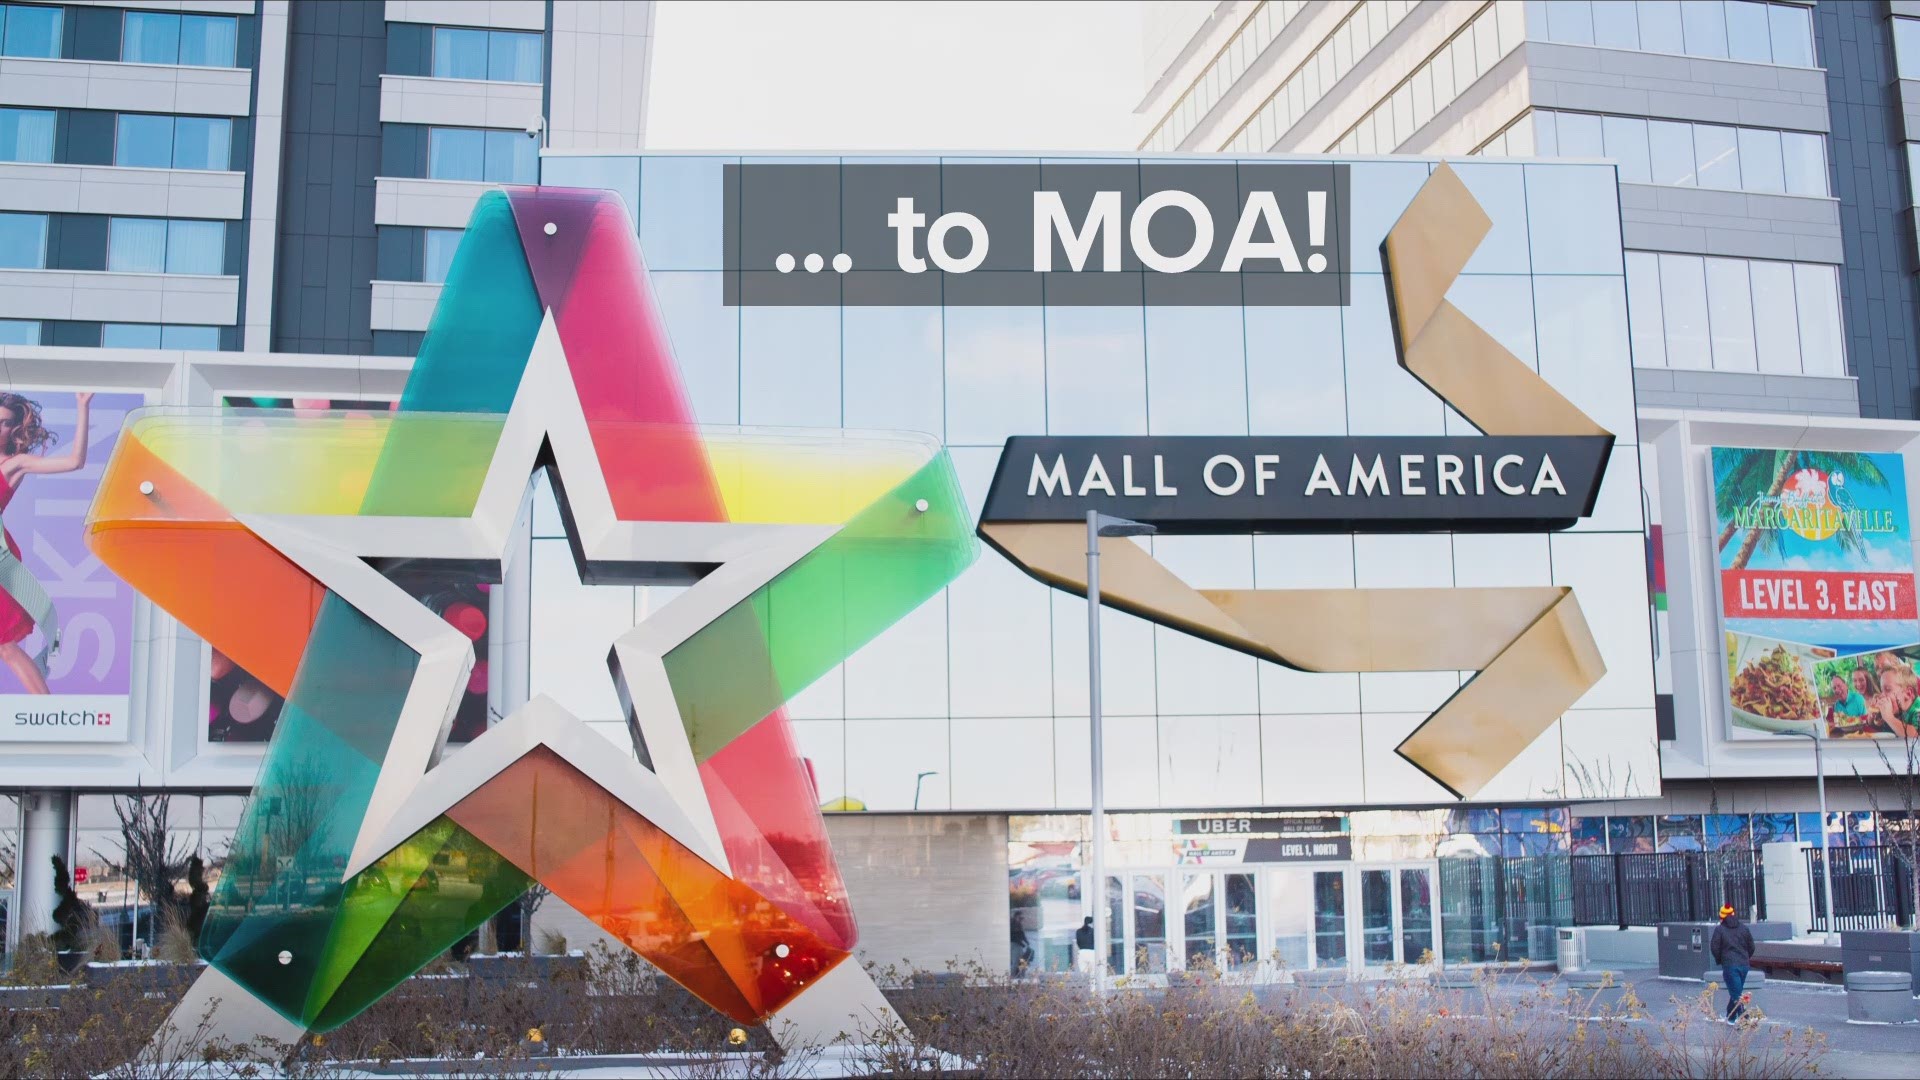 Mall of America (@mallofamerica) • Instagram photos and videos